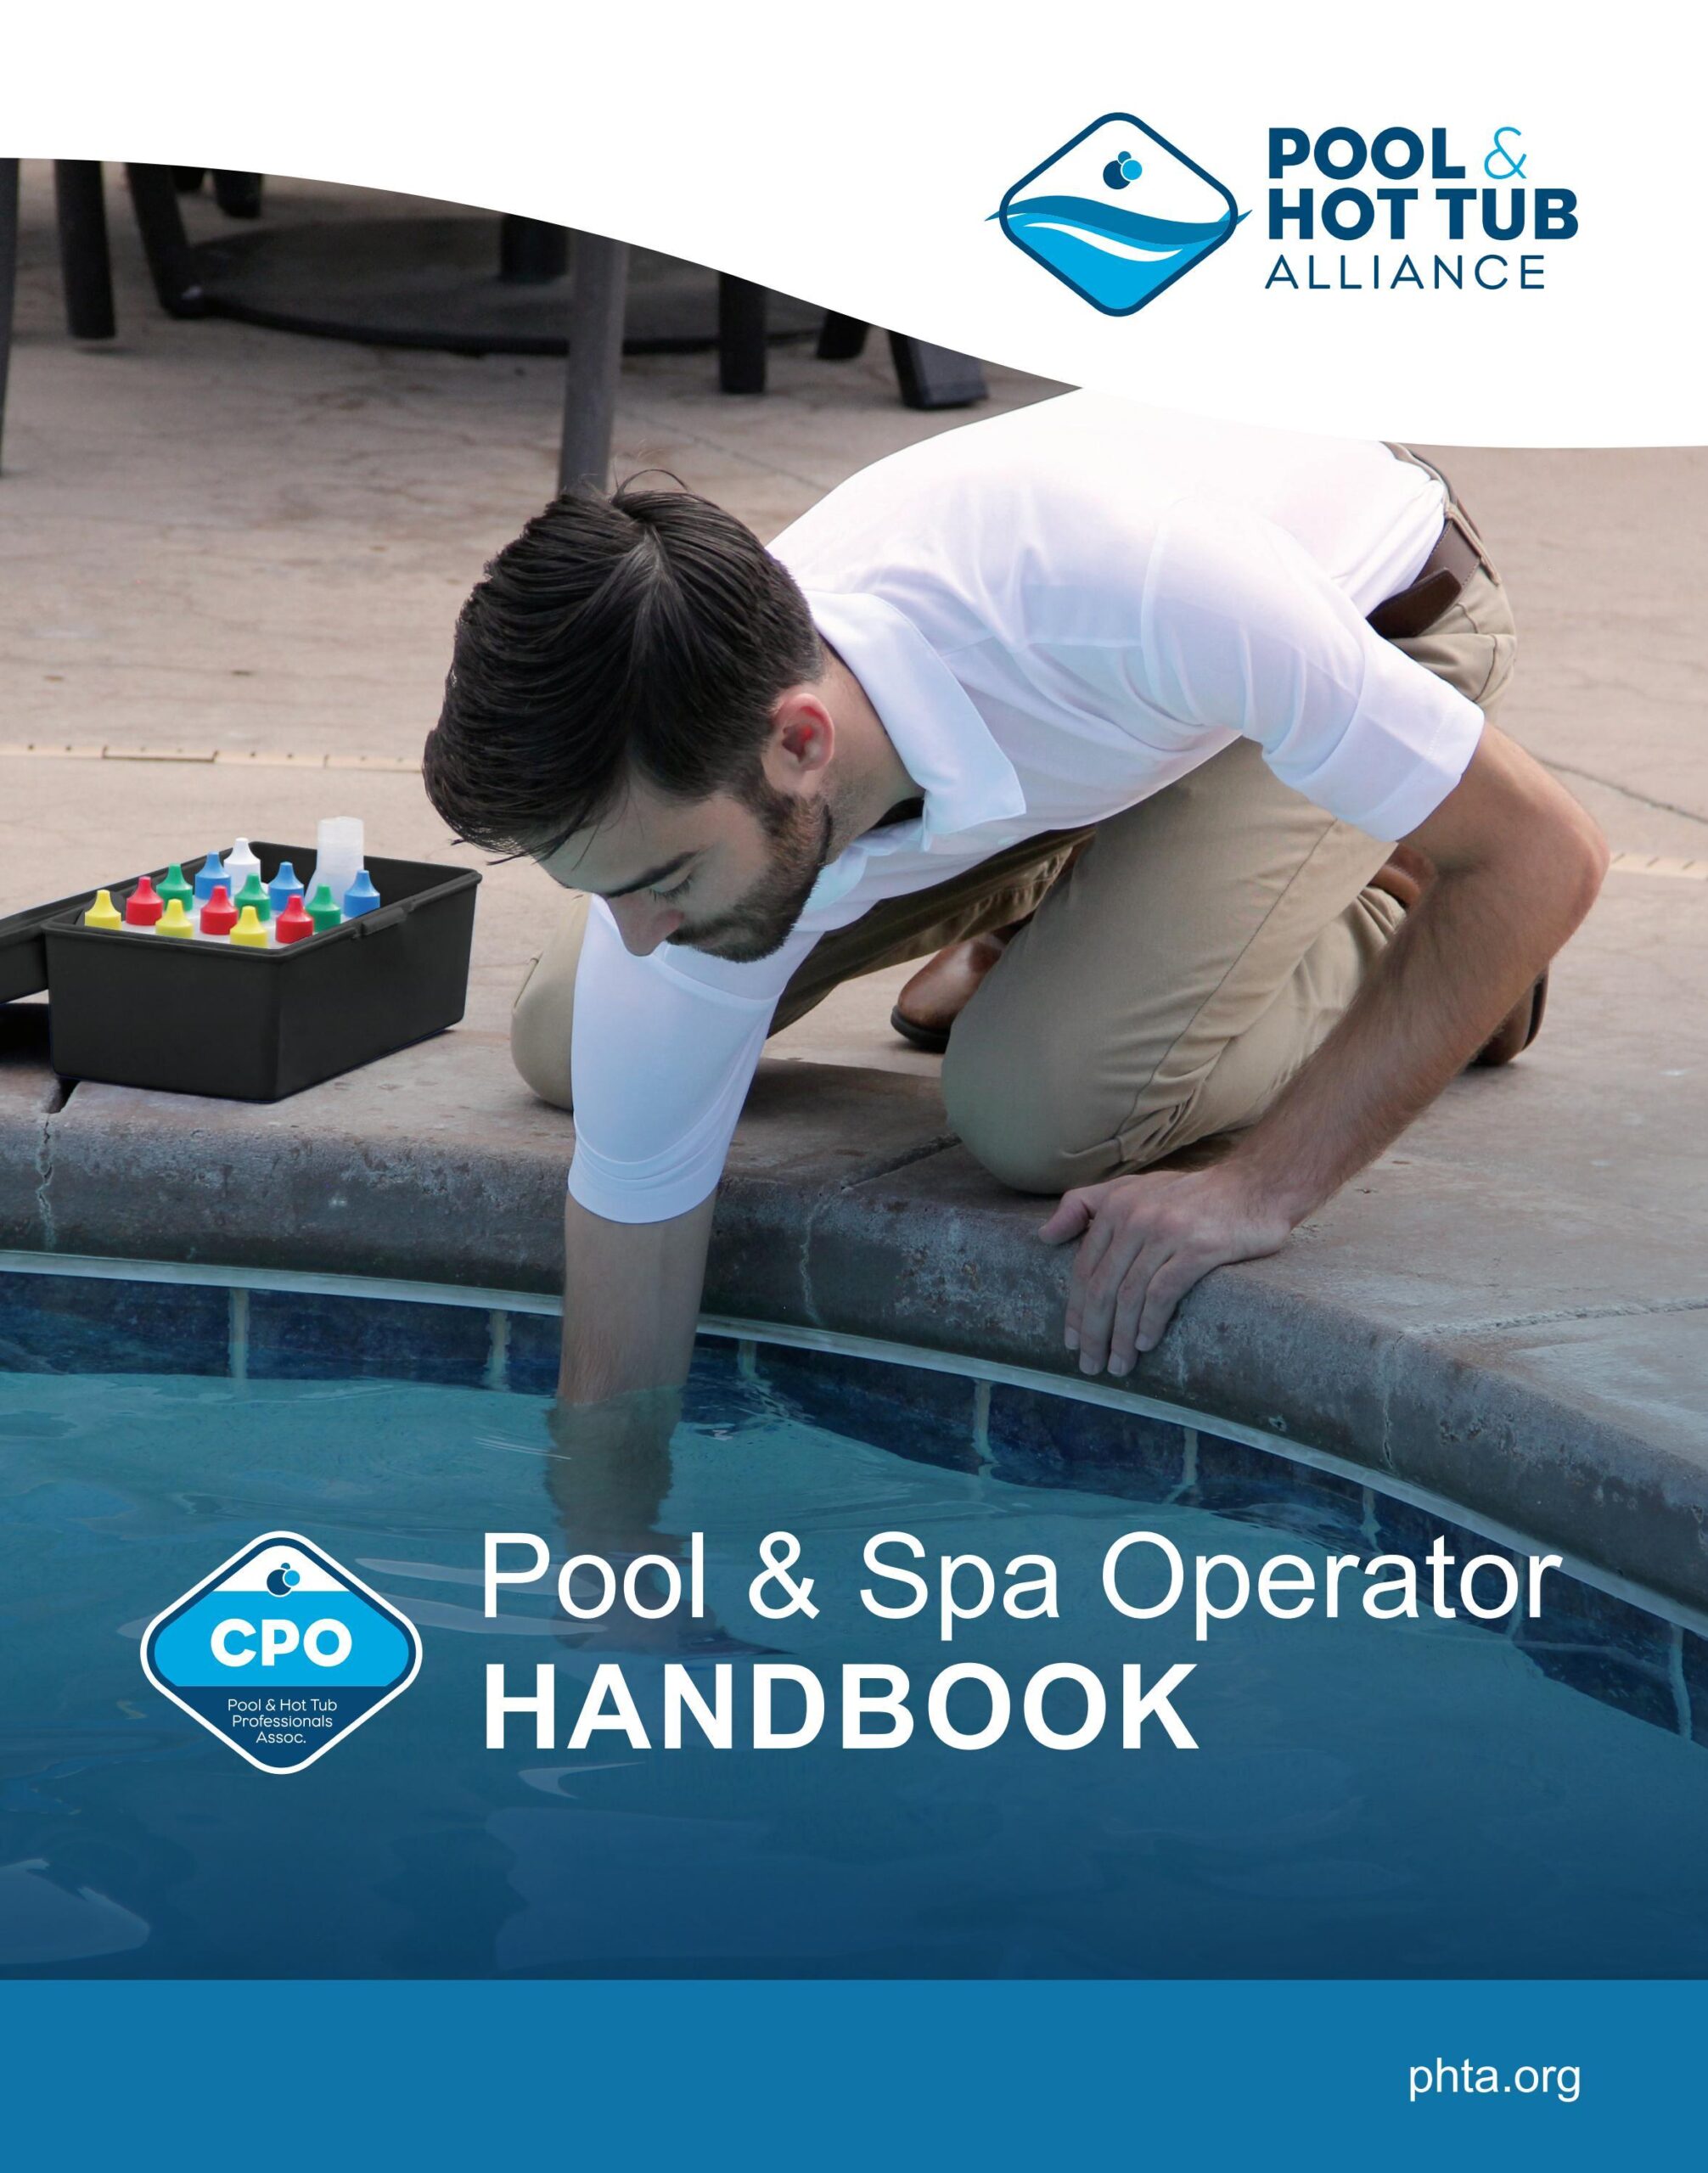 CPO Pool and Spa Operator Handbook